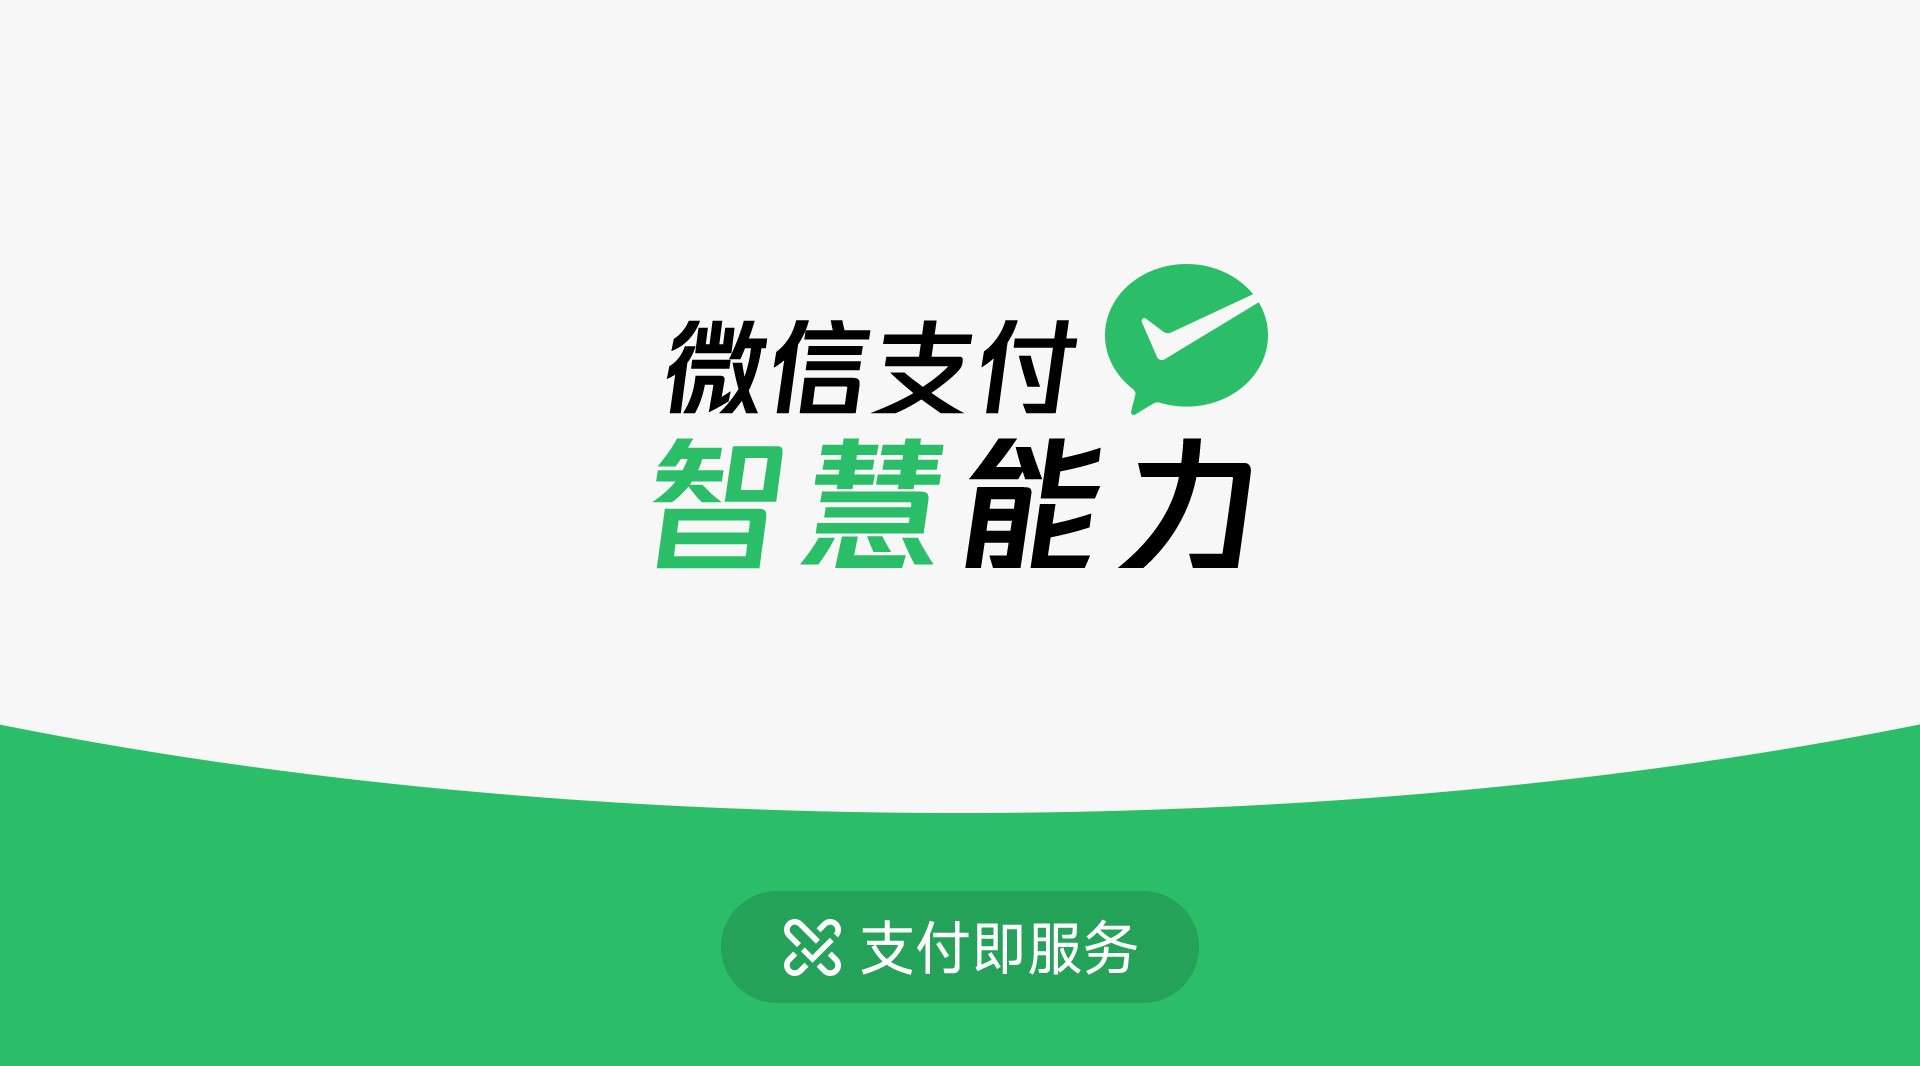 WeChat Pay 智慧能力-支付即服务